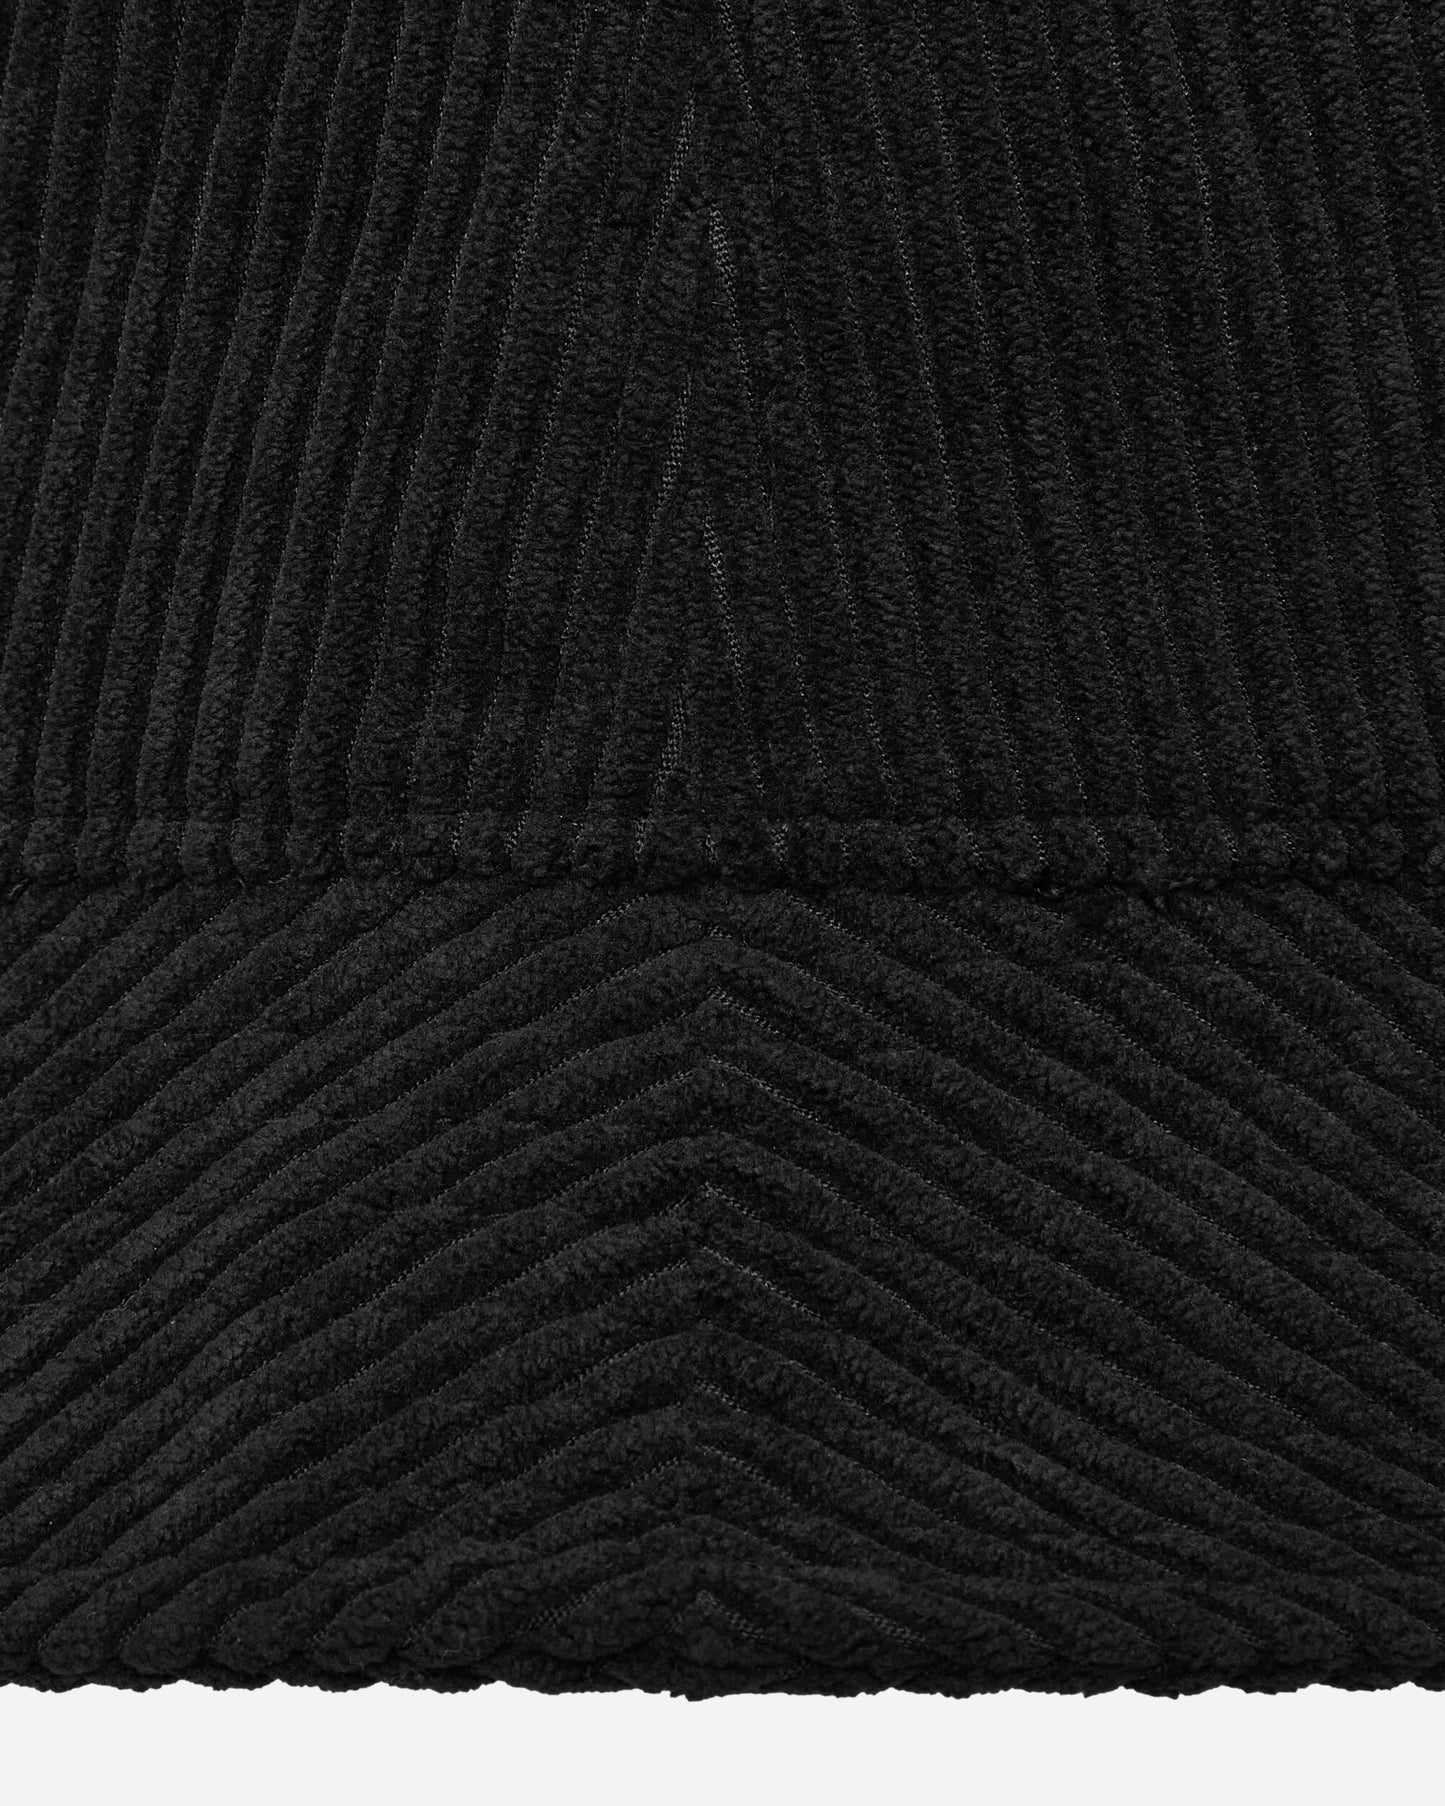 Nike Apex Bucket Sq Cord L Black/Black Hats Bucket FB5385-010